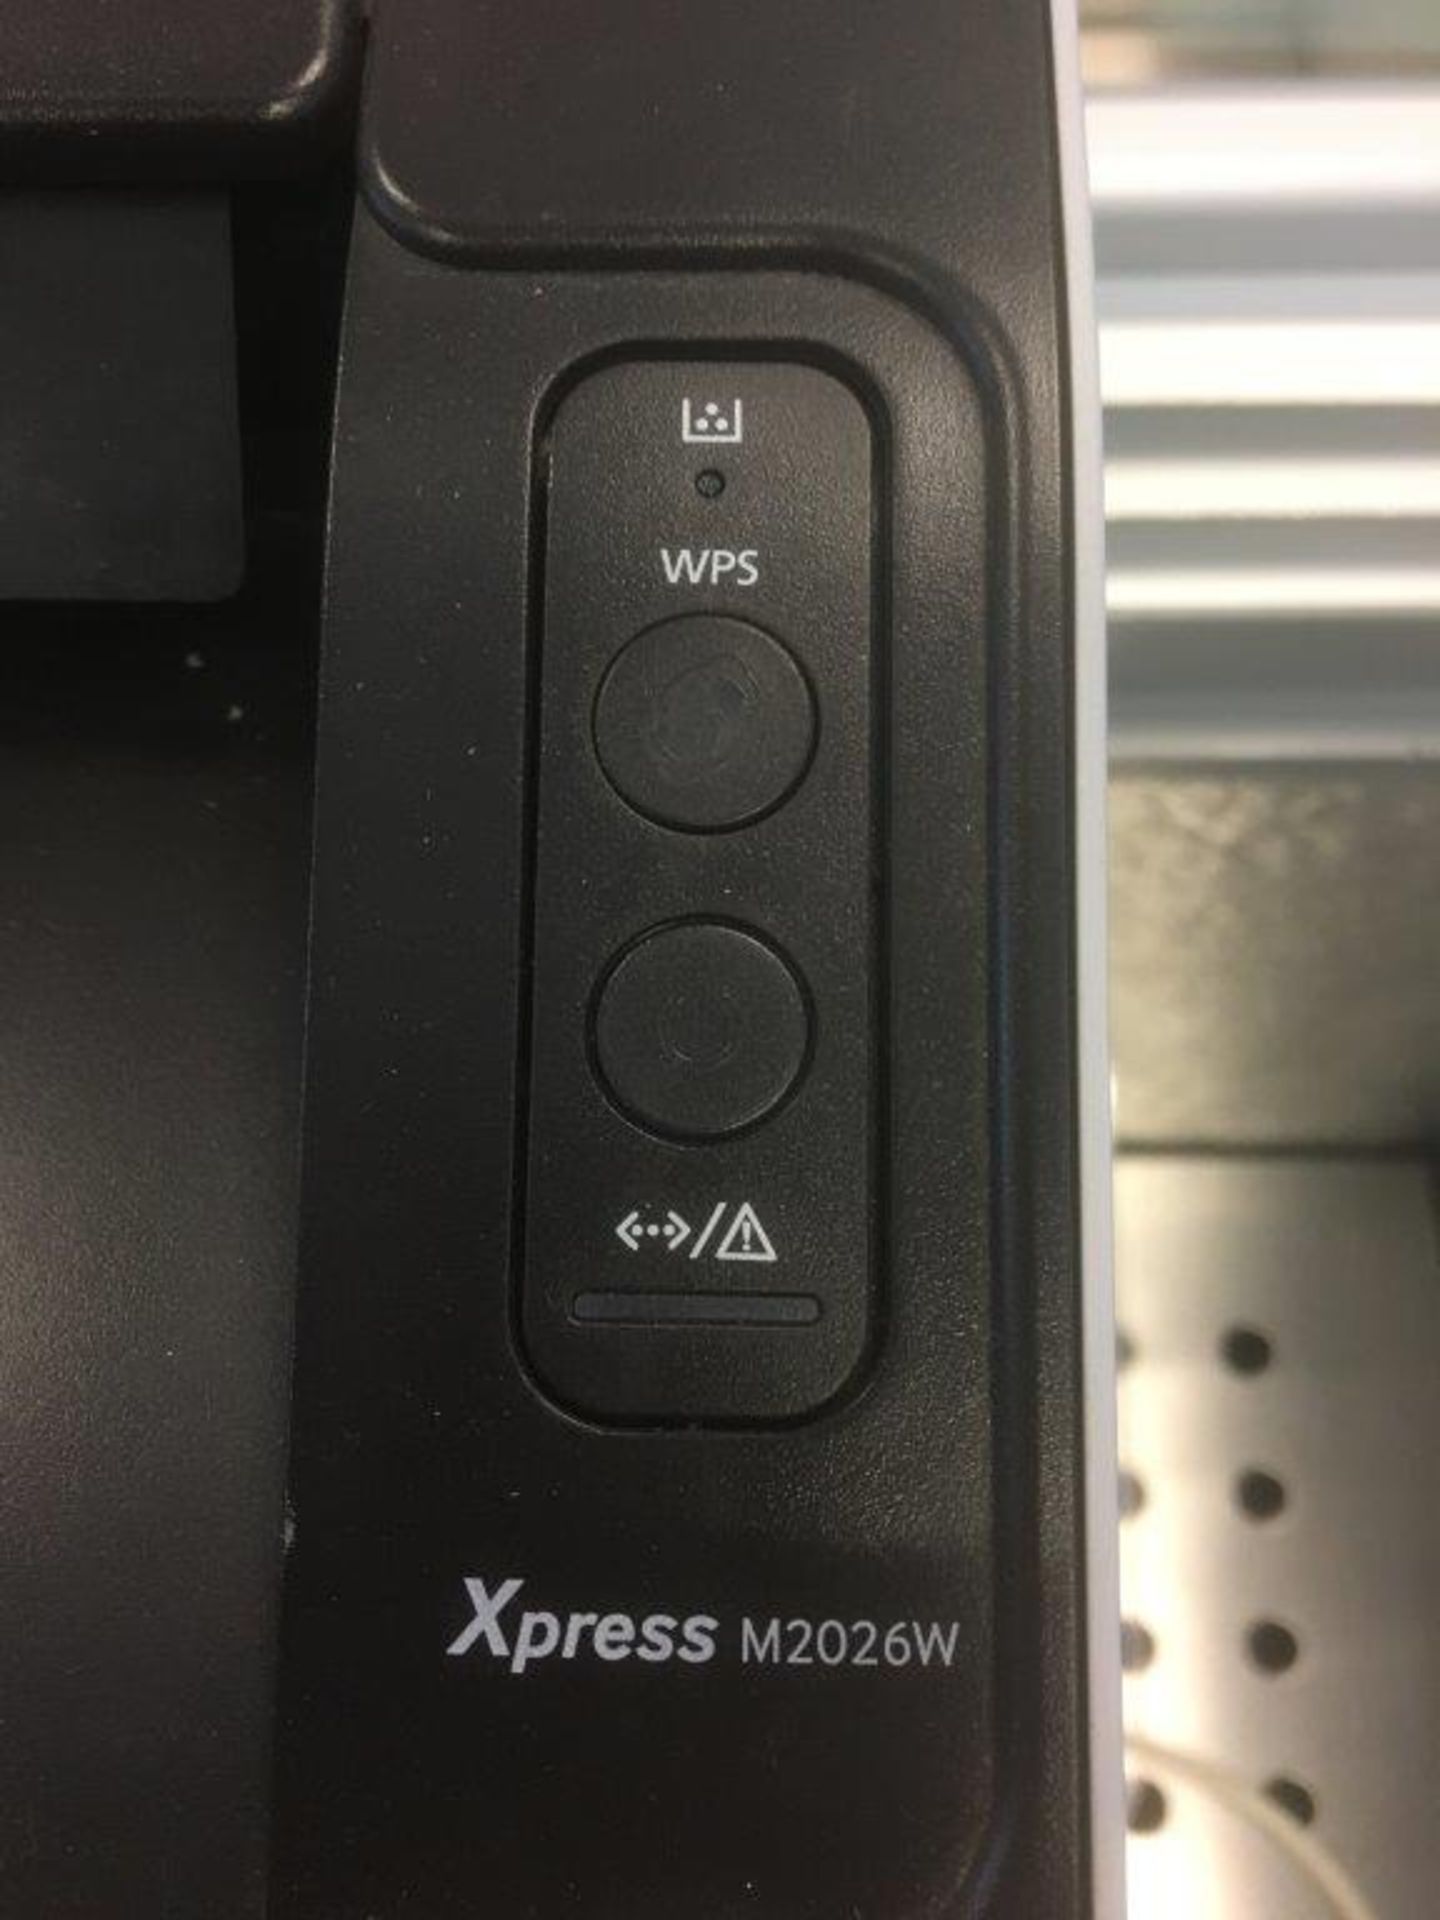 Samsung Xpress M2026W printer - Image 2 of 2